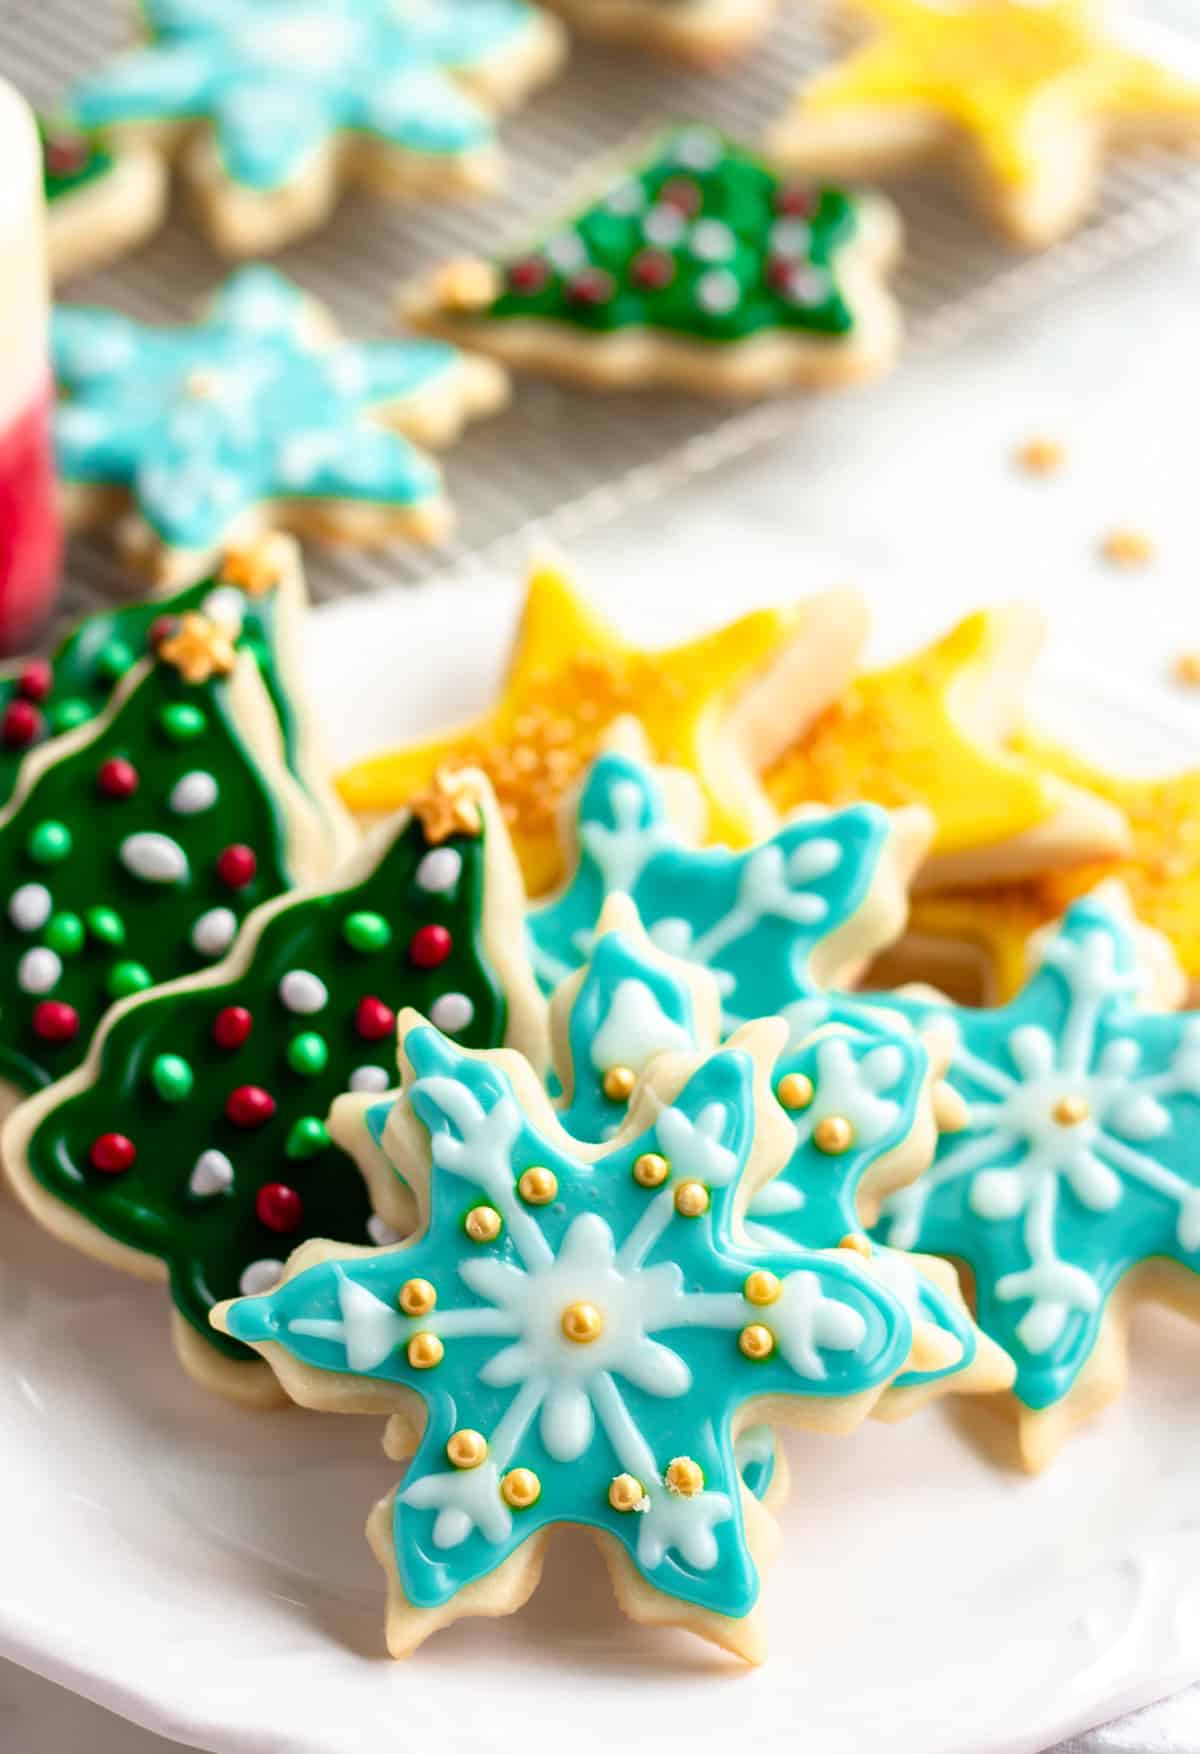 blue snowflake cookies and more vegan sugar cookies in the background on cooling rack